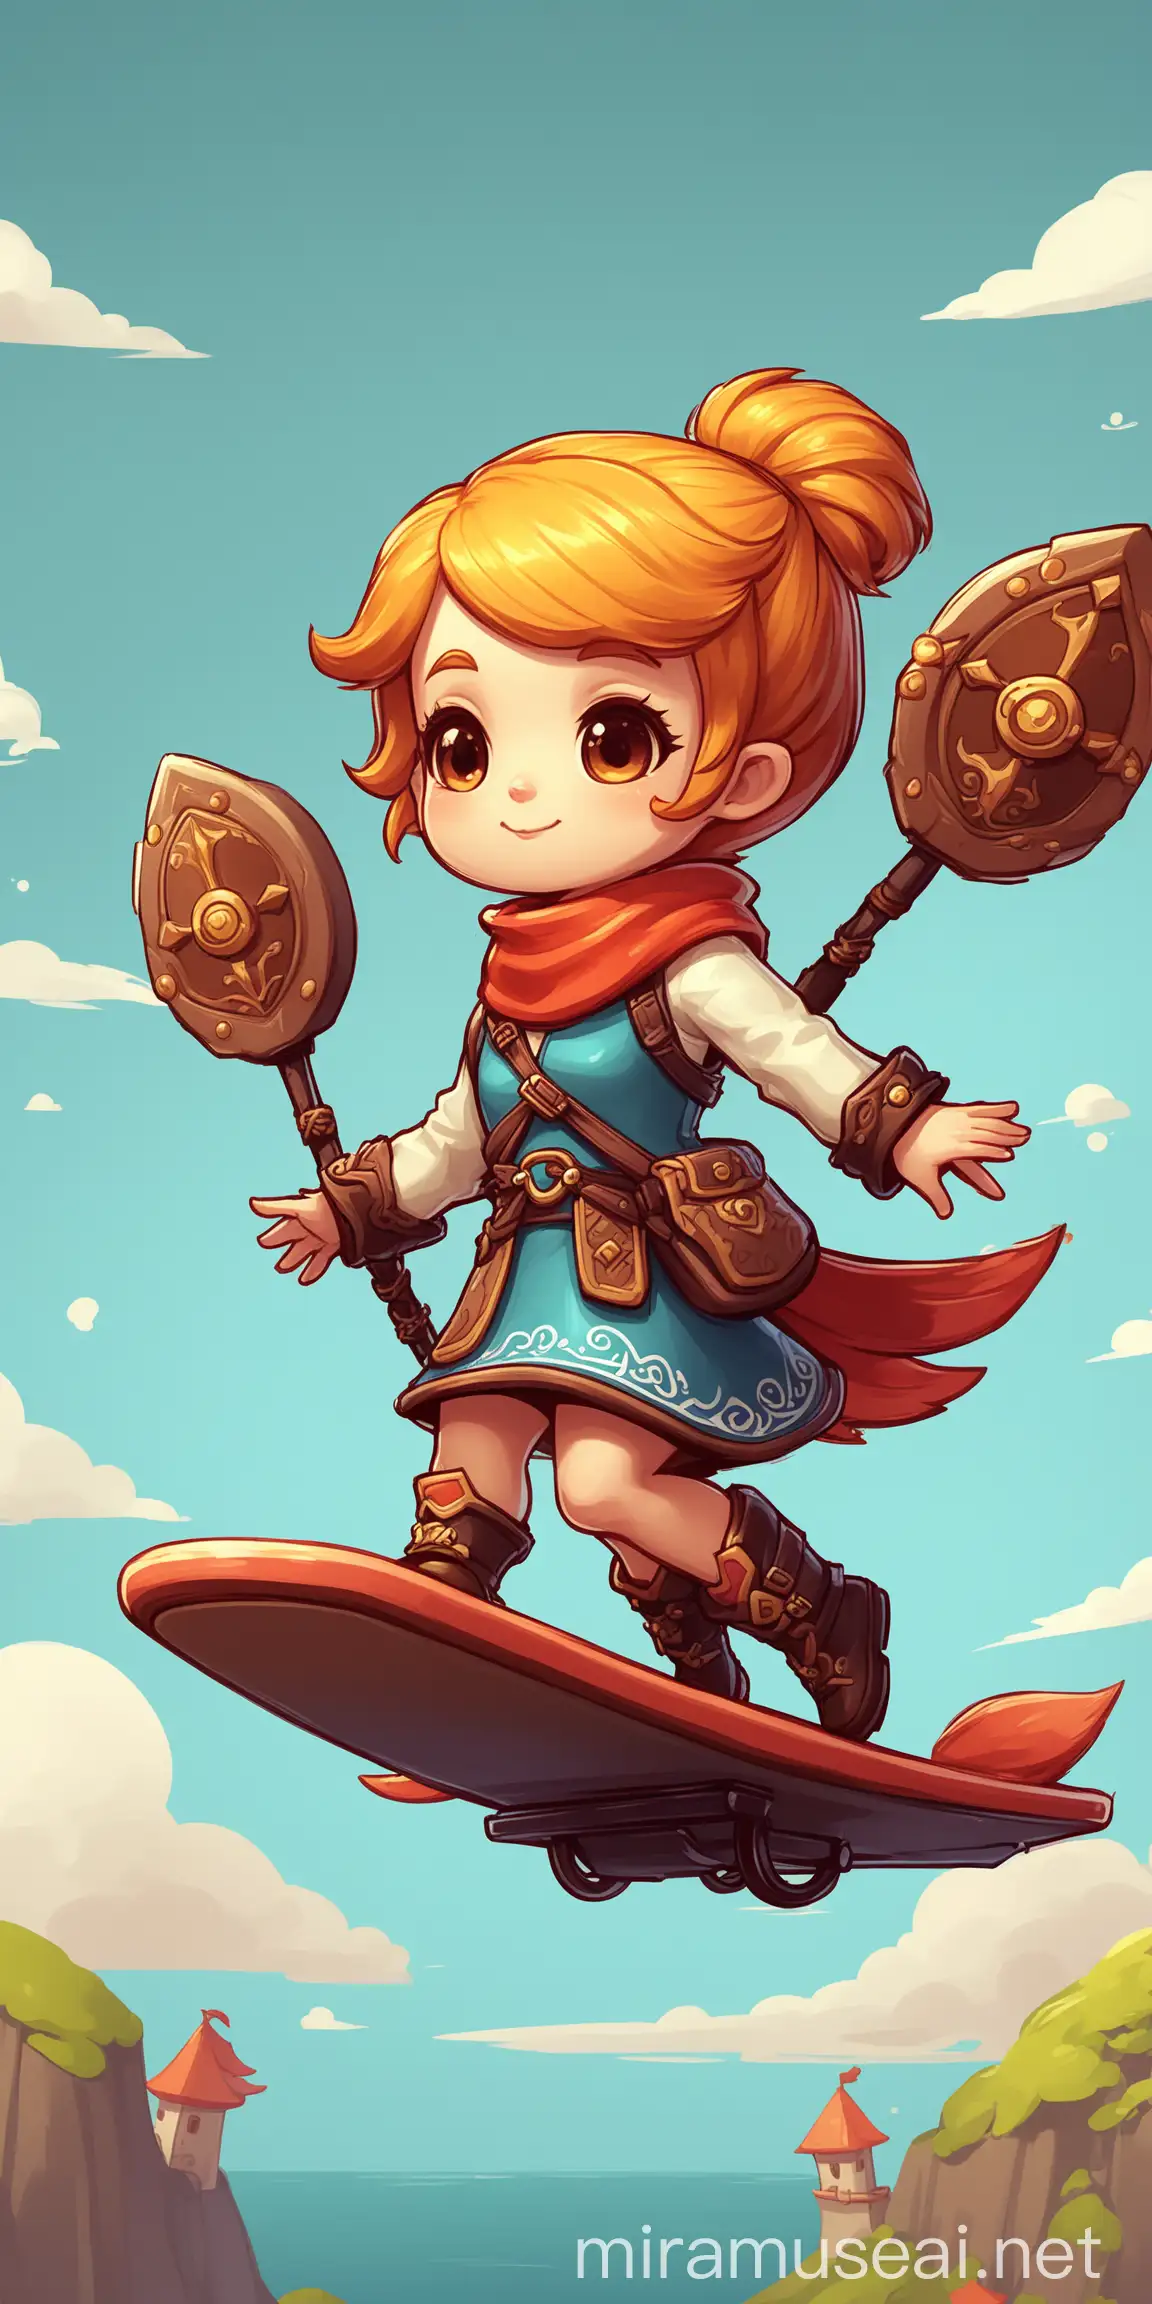 Stylized Cute RPG Character Flying on Board Thumbnail Art